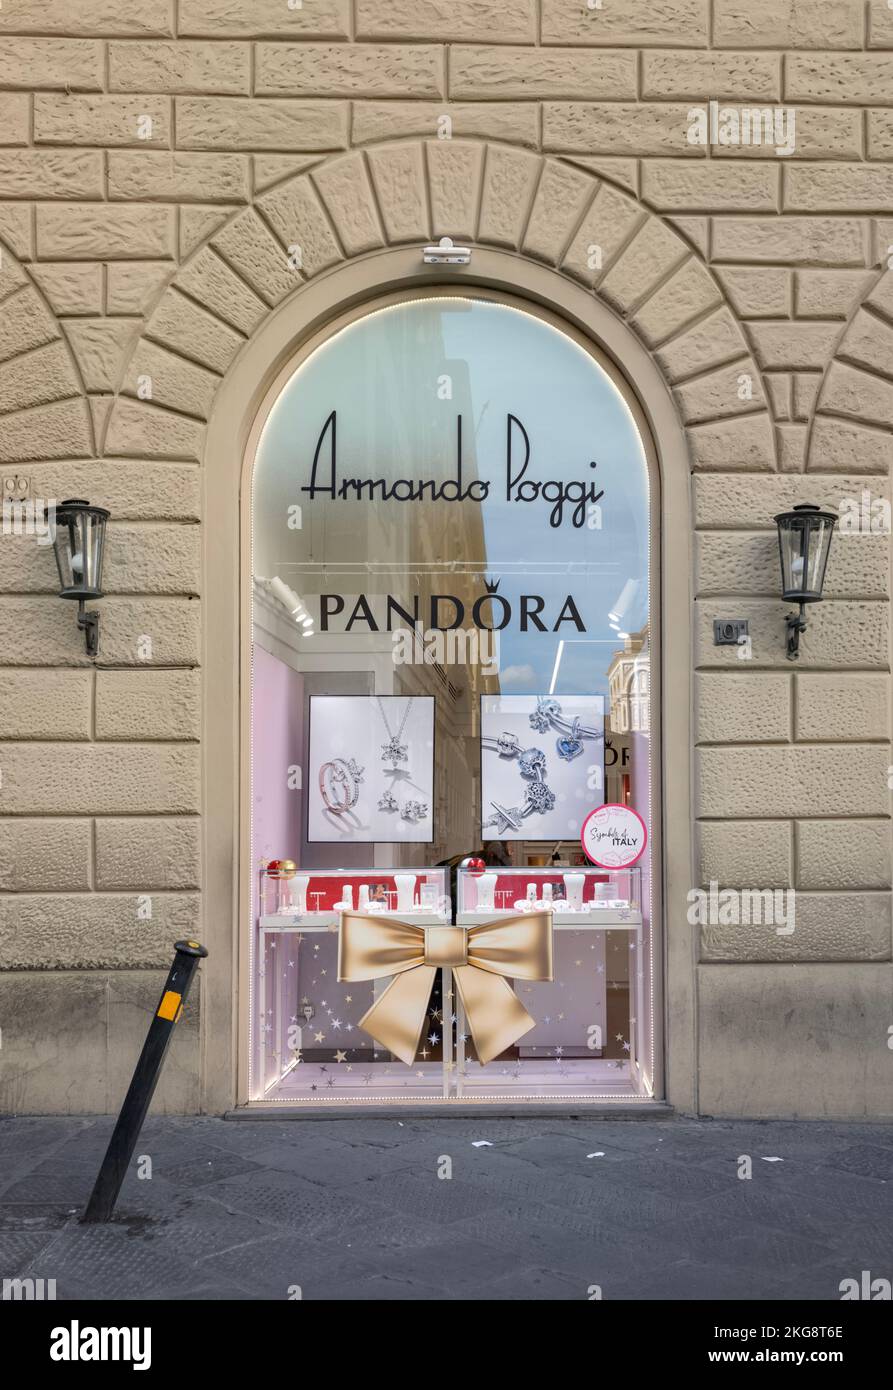 Pandora jewellery store Florence, Italy Armando Poggi shop selling Pandora  jewellery and home design items Stock Photo - Alamy